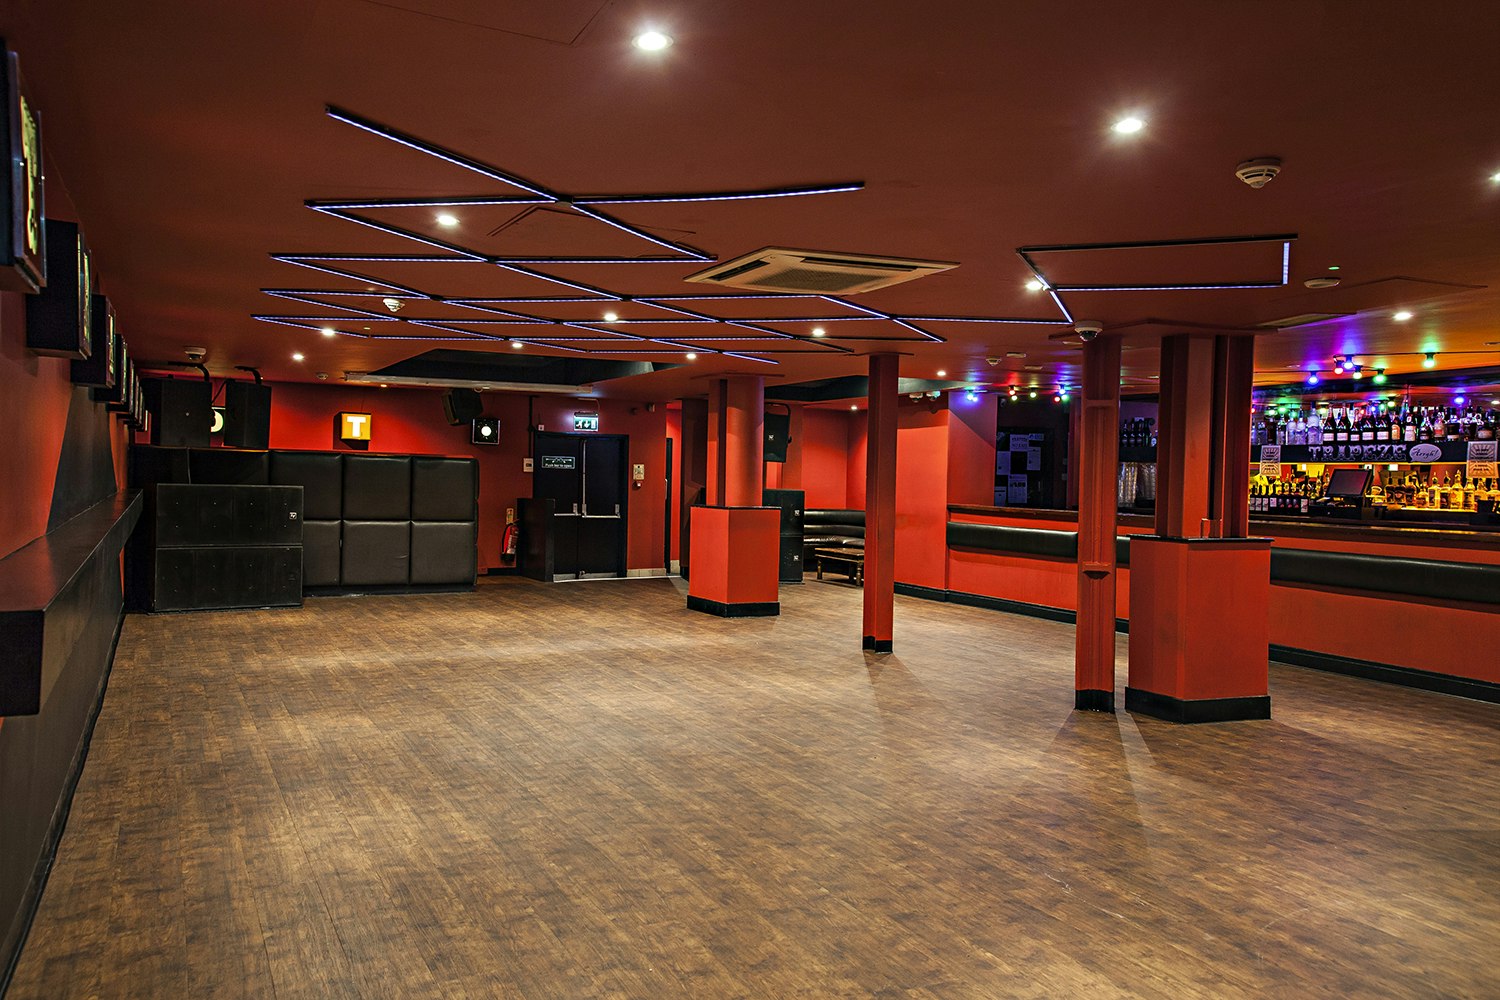 Nightclub Venues in London - Trapeze Bar